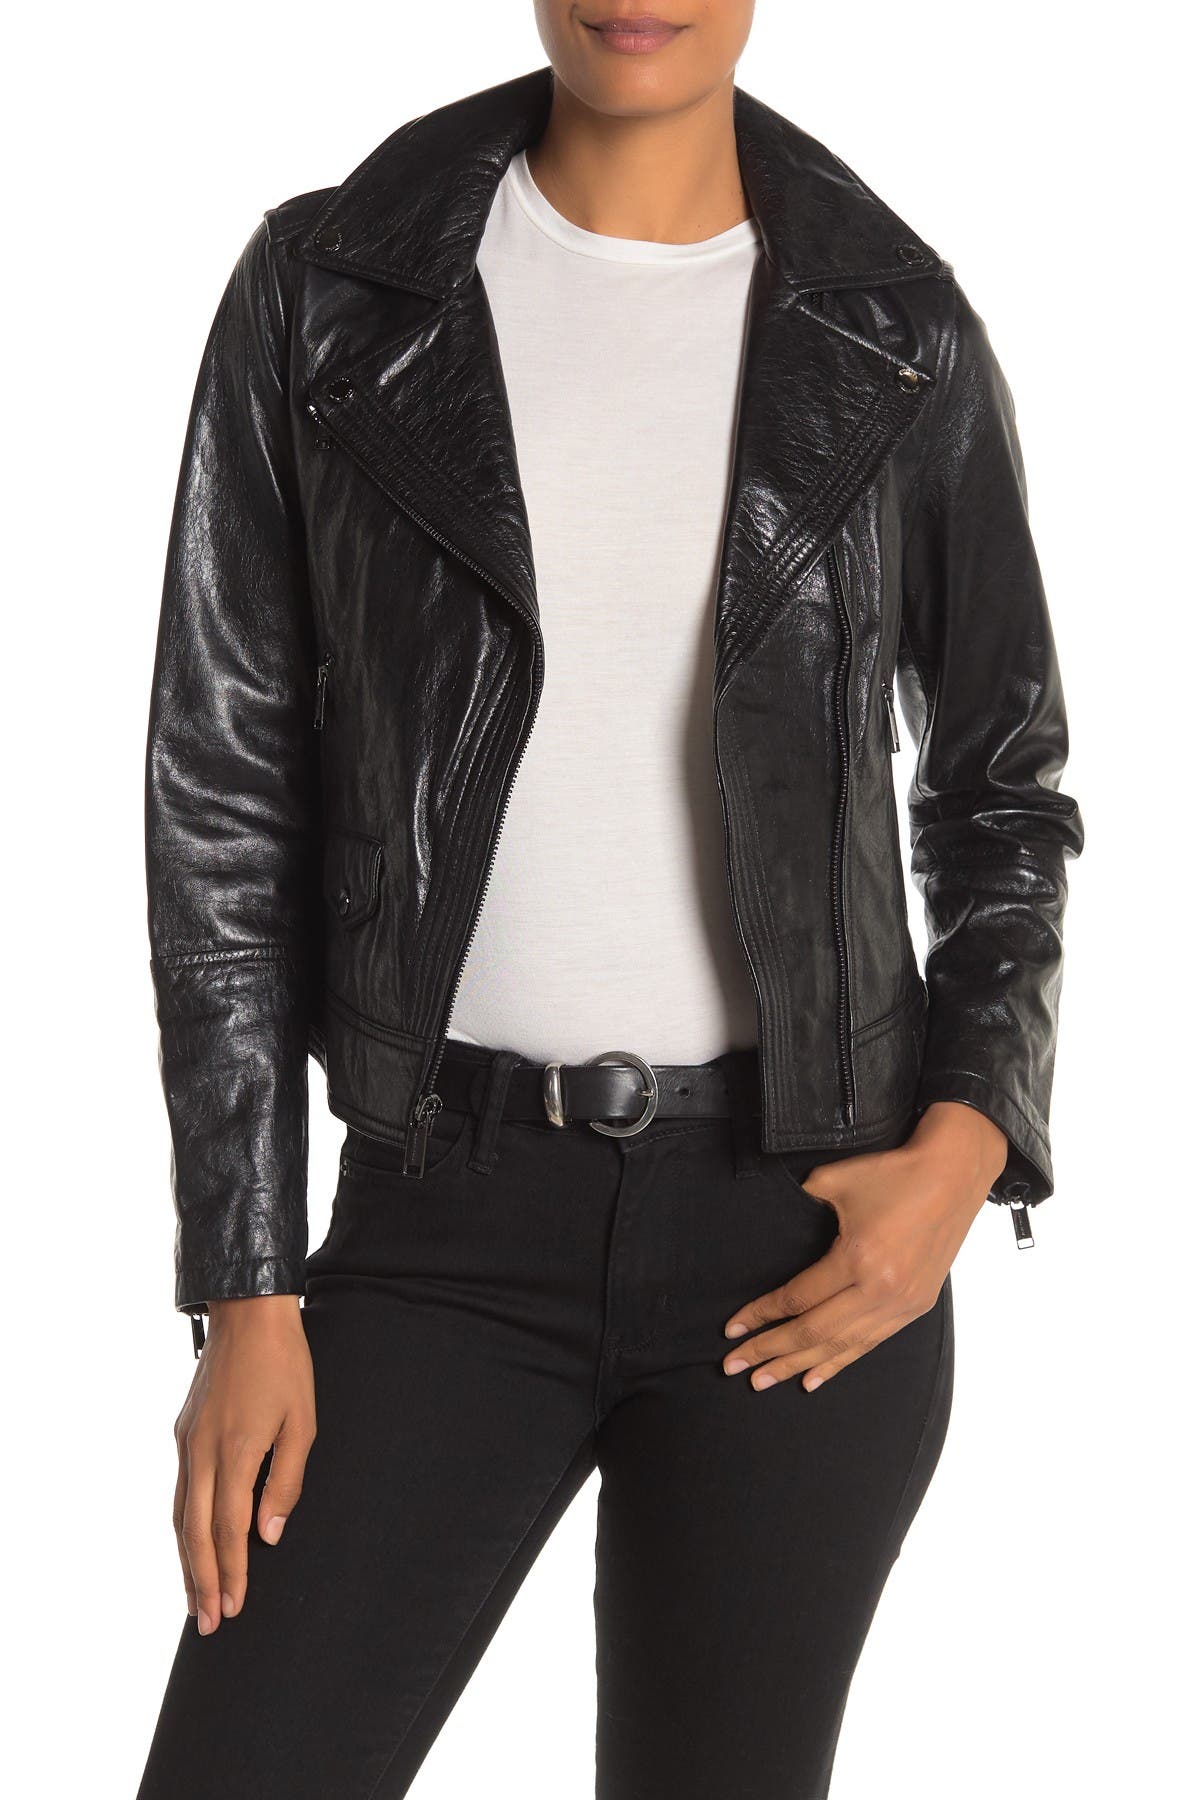 michael kors women's black leather motorcycle jacket